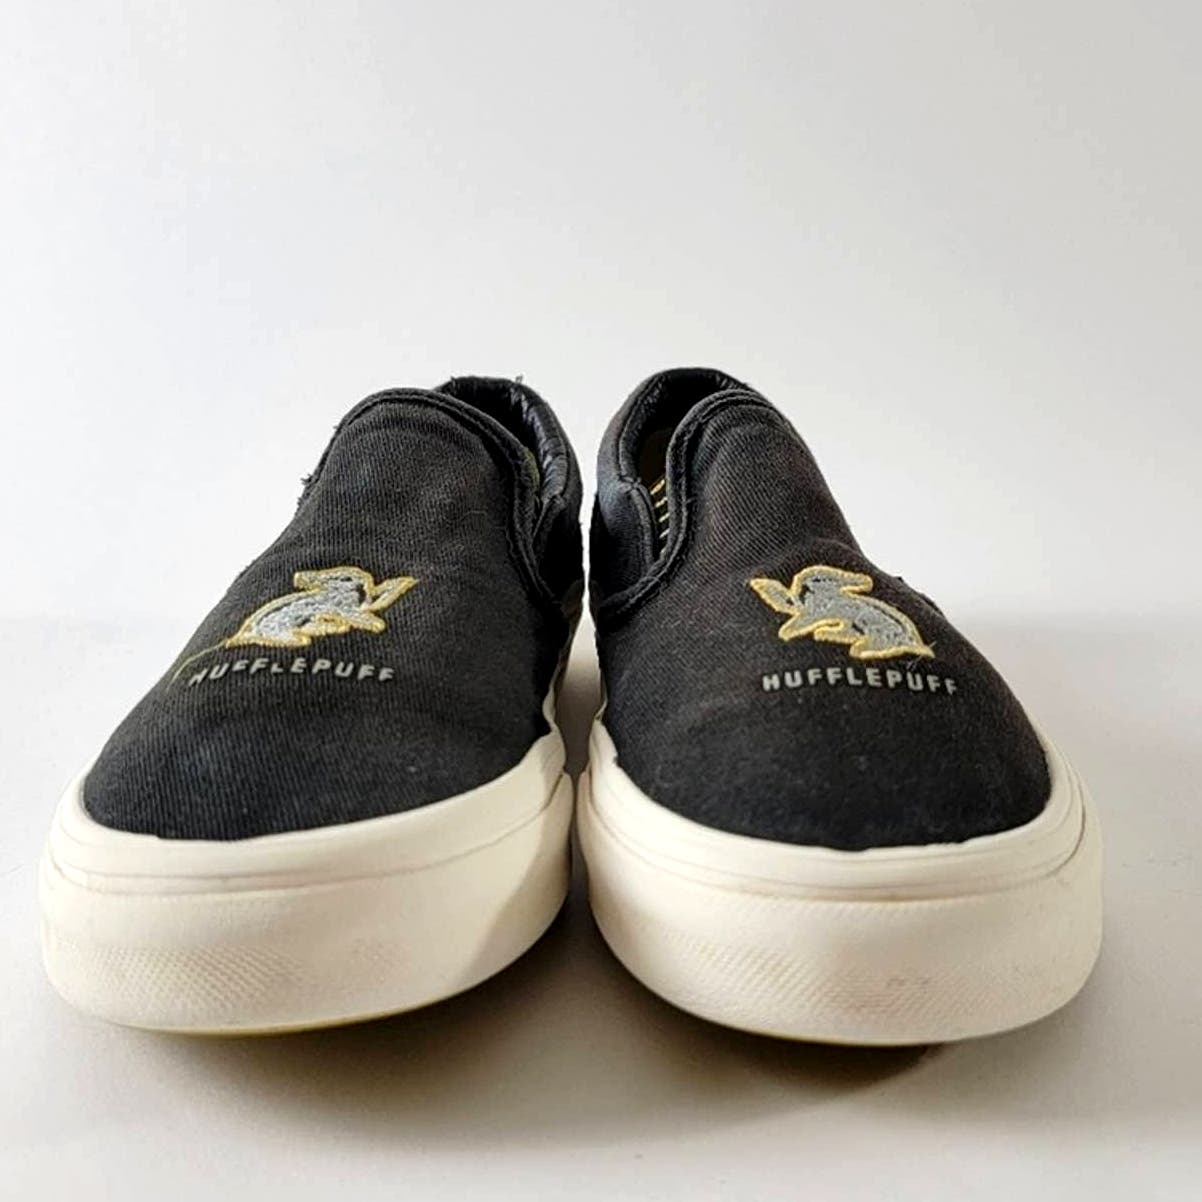 Vans Slip On x Harry Potter HufflePuff Sneakers - 5.5